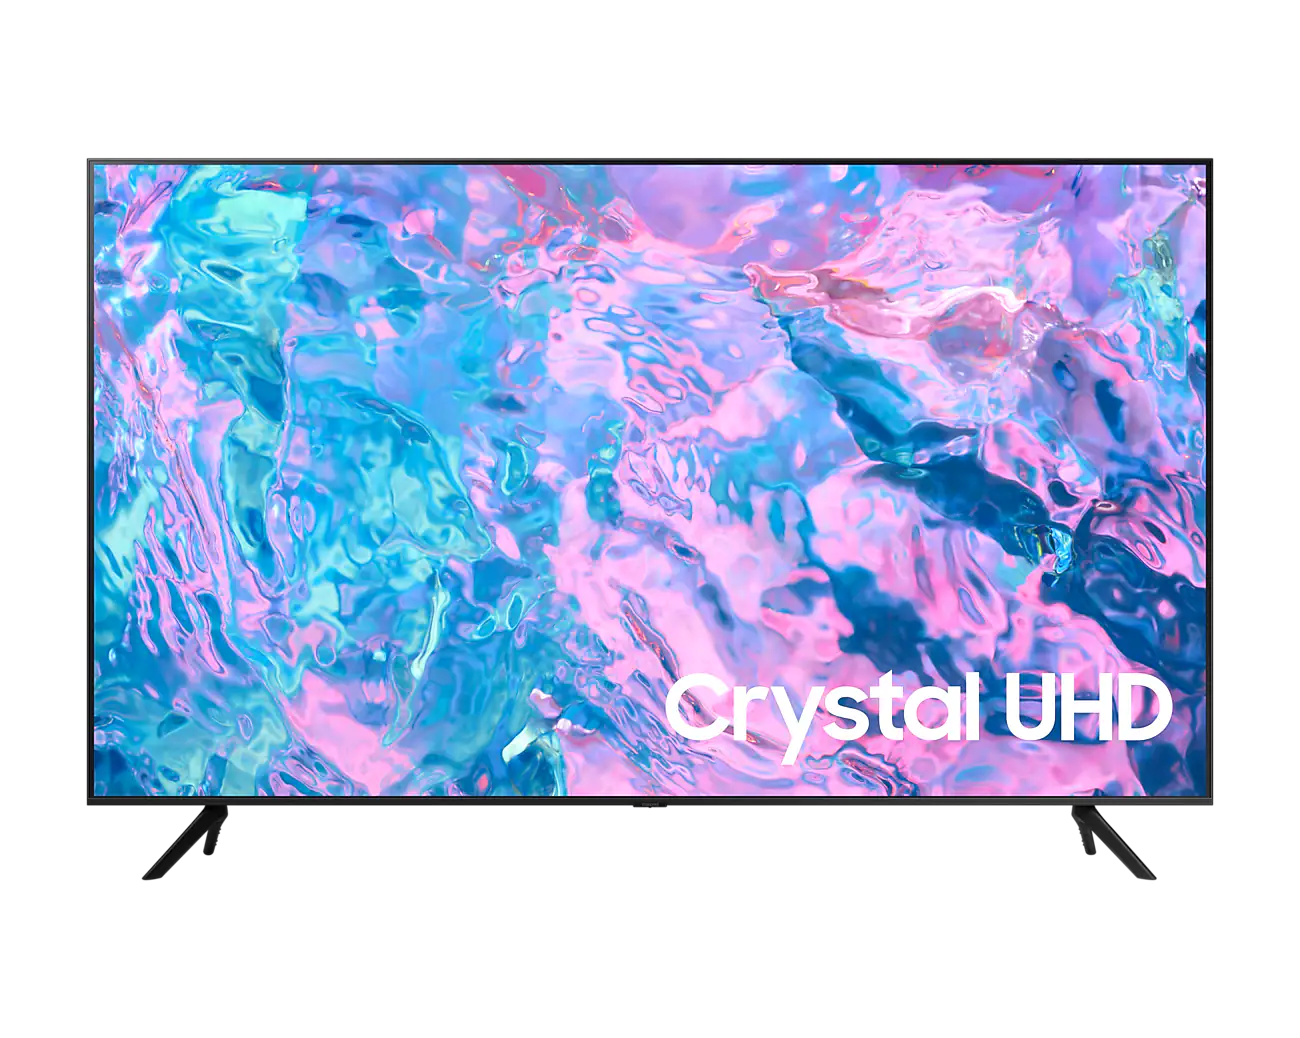 ⭐SAMSUNG BU8000 Smart Tv Crystal UHD NUEVA LINEA 2022: Overview